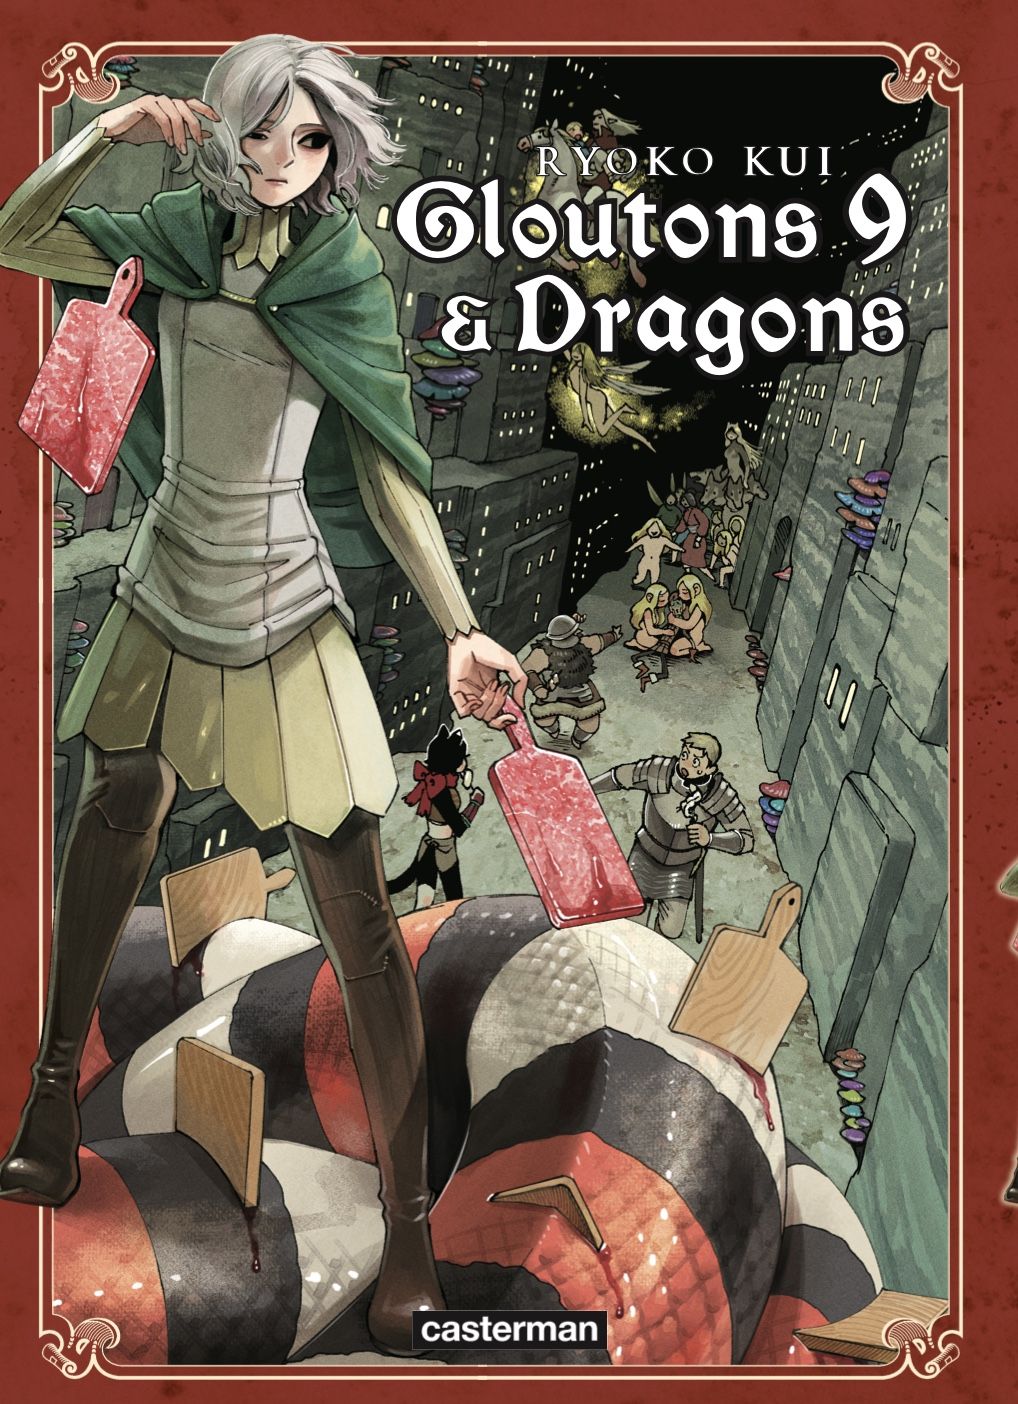 Sortie Manga au Québec JUIN 2021 Gloutons-dragon-9-casterman